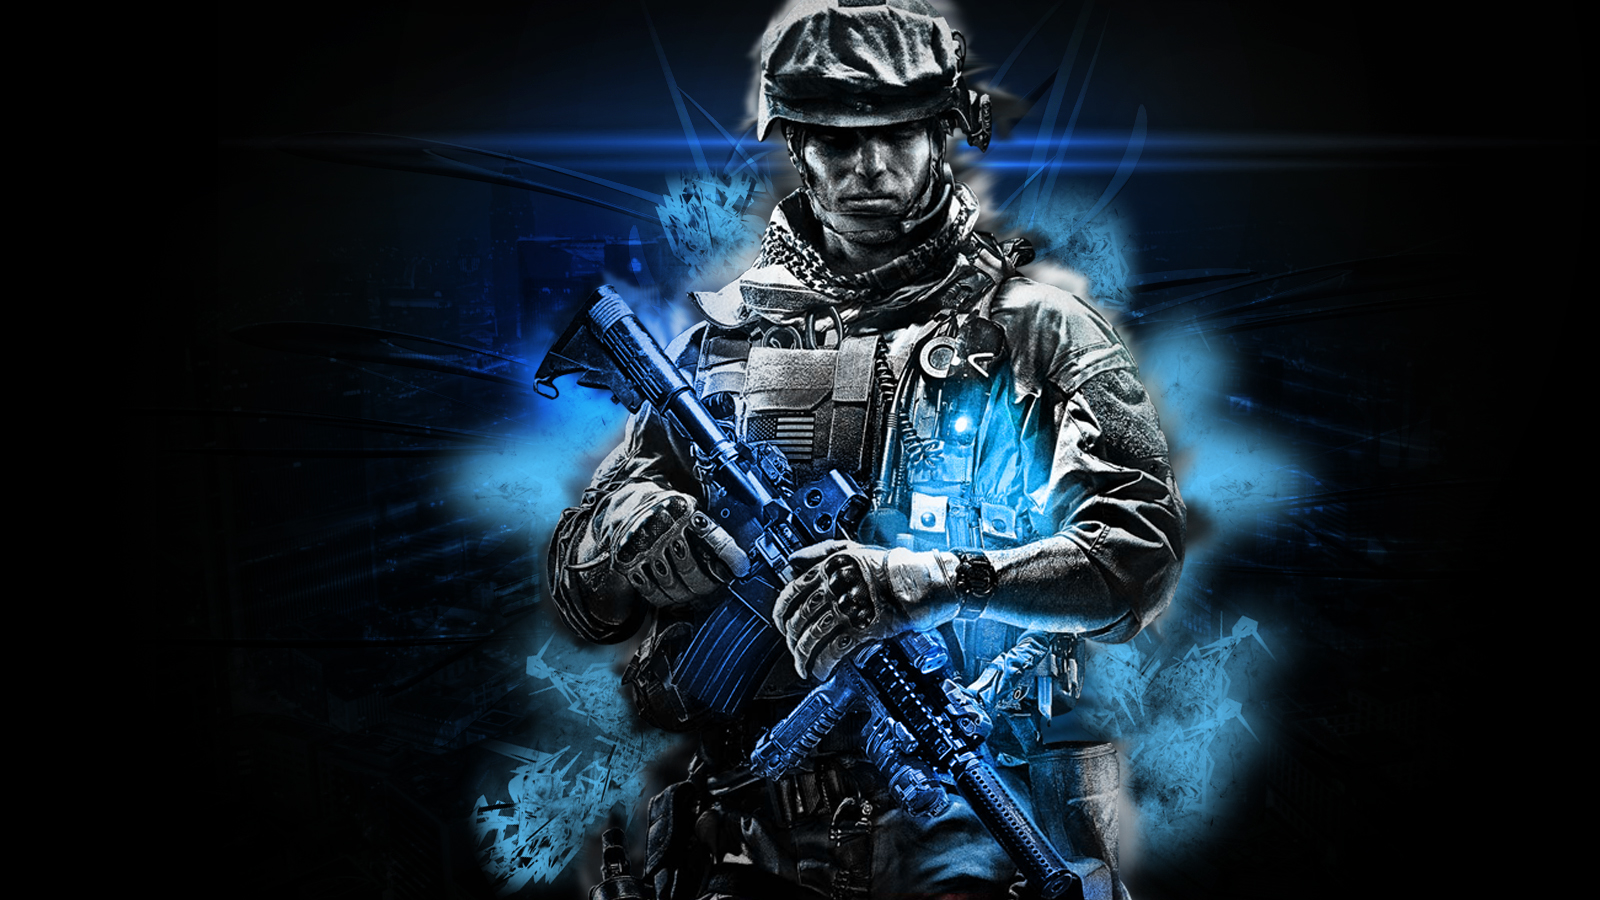 50+] Battlefield 3 Wallpaper HD - WallpaperSafari